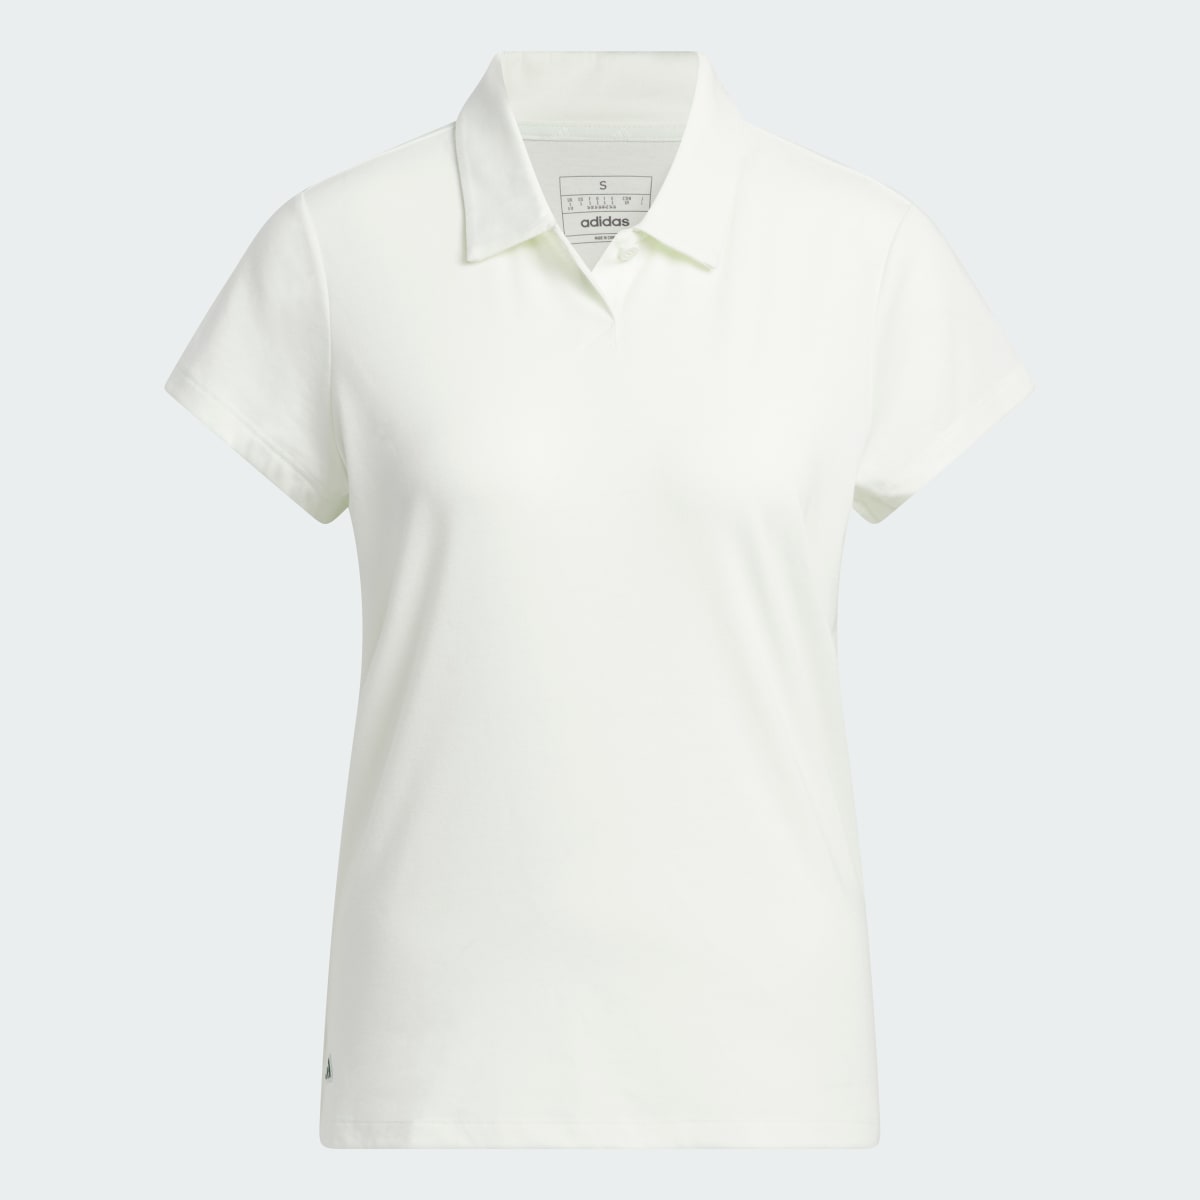 Adidas Go-To Heathered Polo Shirt. 5